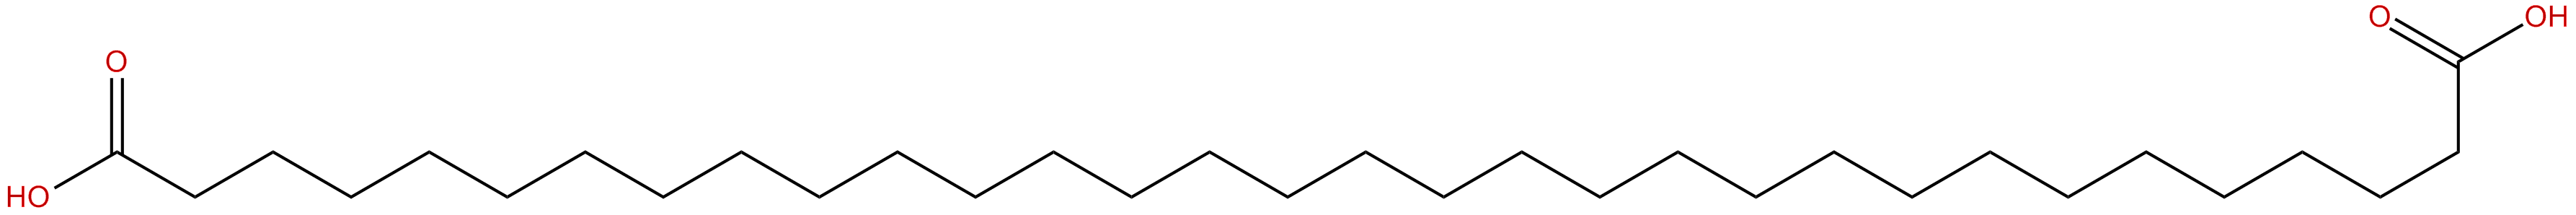 Image of dotriacontanedioic acid